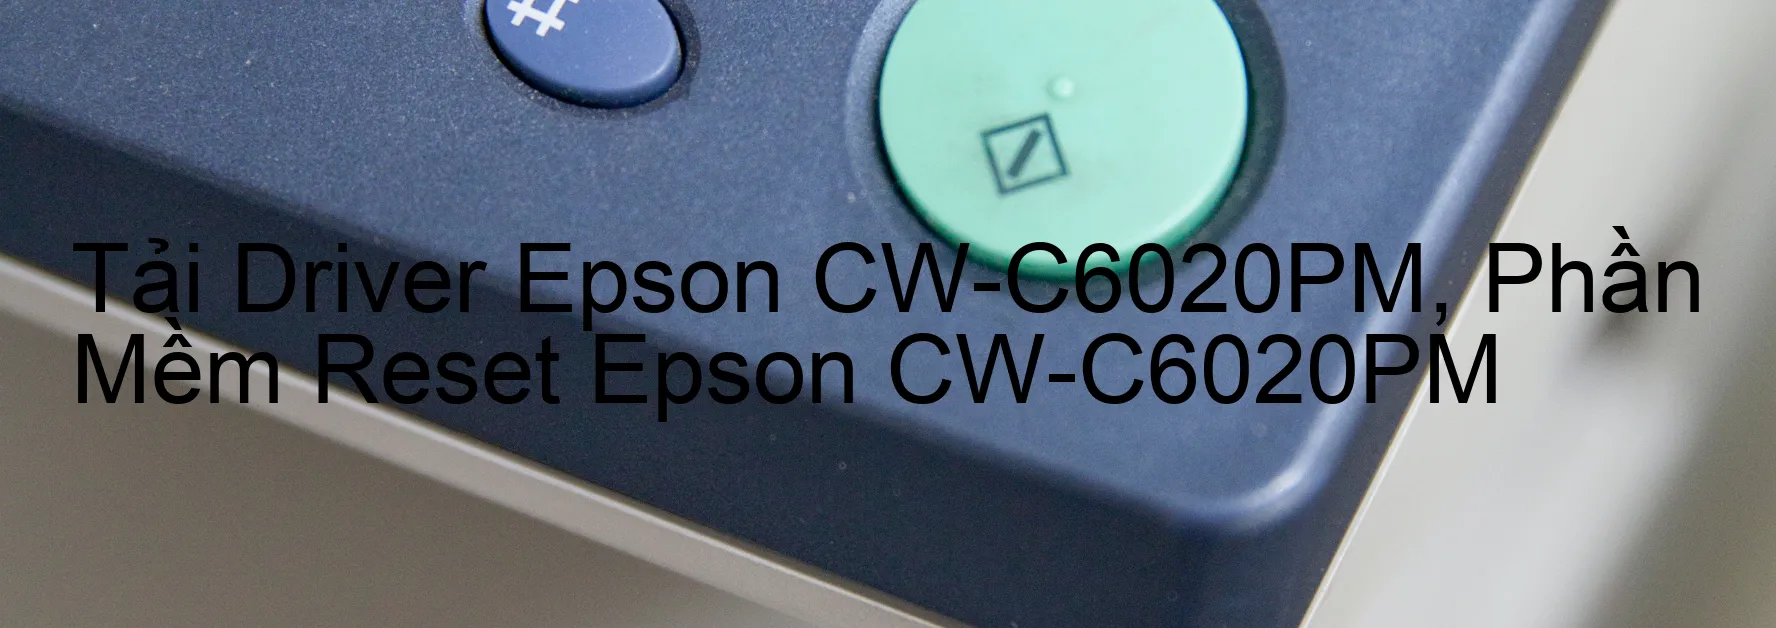 Driver Epson CW-C6020PM, Phần Mềm Reset Epson CW-C6020PM